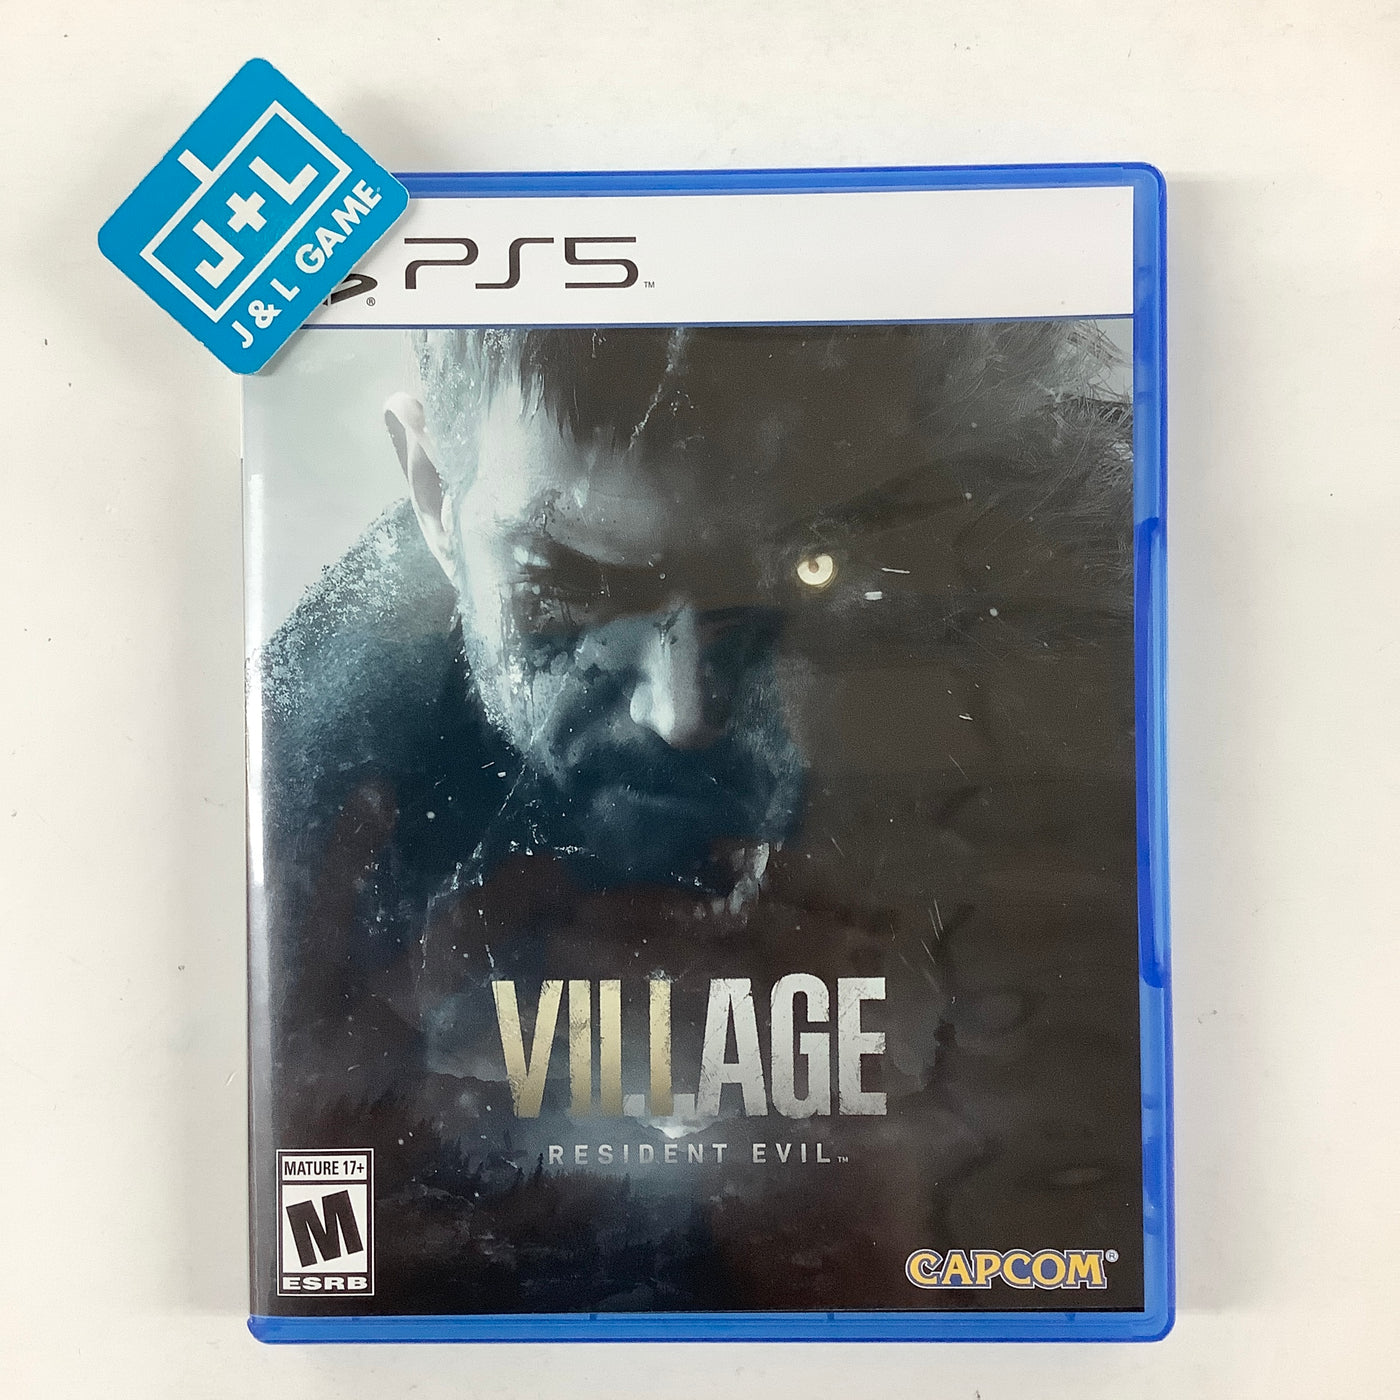 Resident Evil Village - (PS5) PlayStation 5 [UNBOXING]